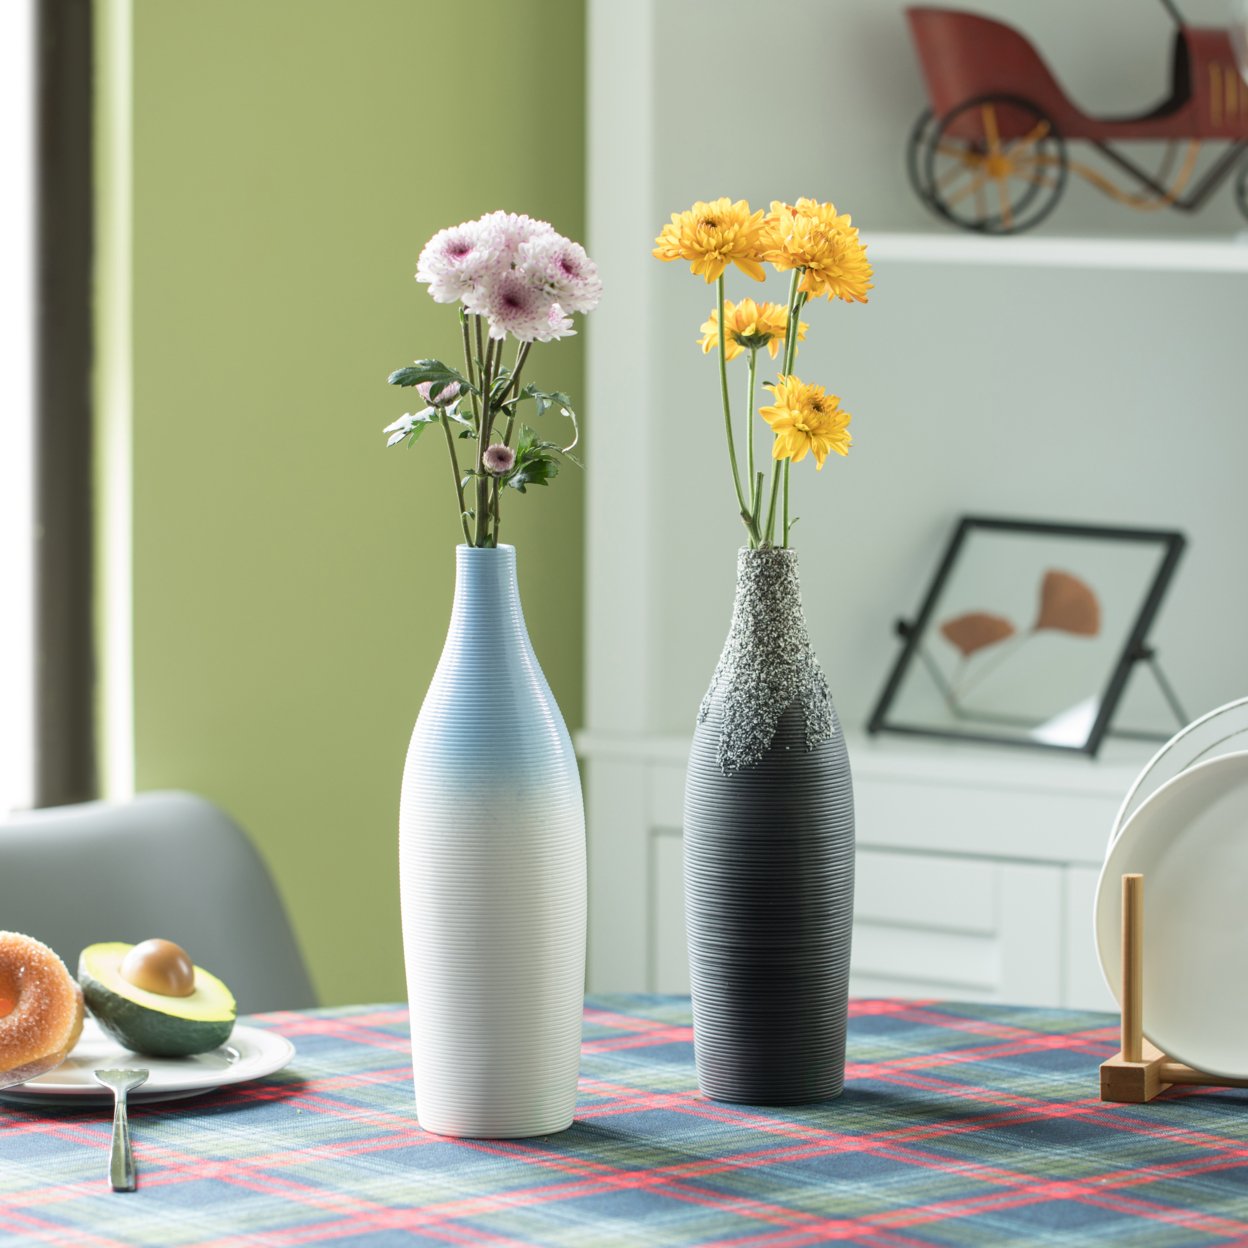 Modern Decorative Ceramic Table Vase Ripped Design Bottle Shape Flower Holder - Set Of 2